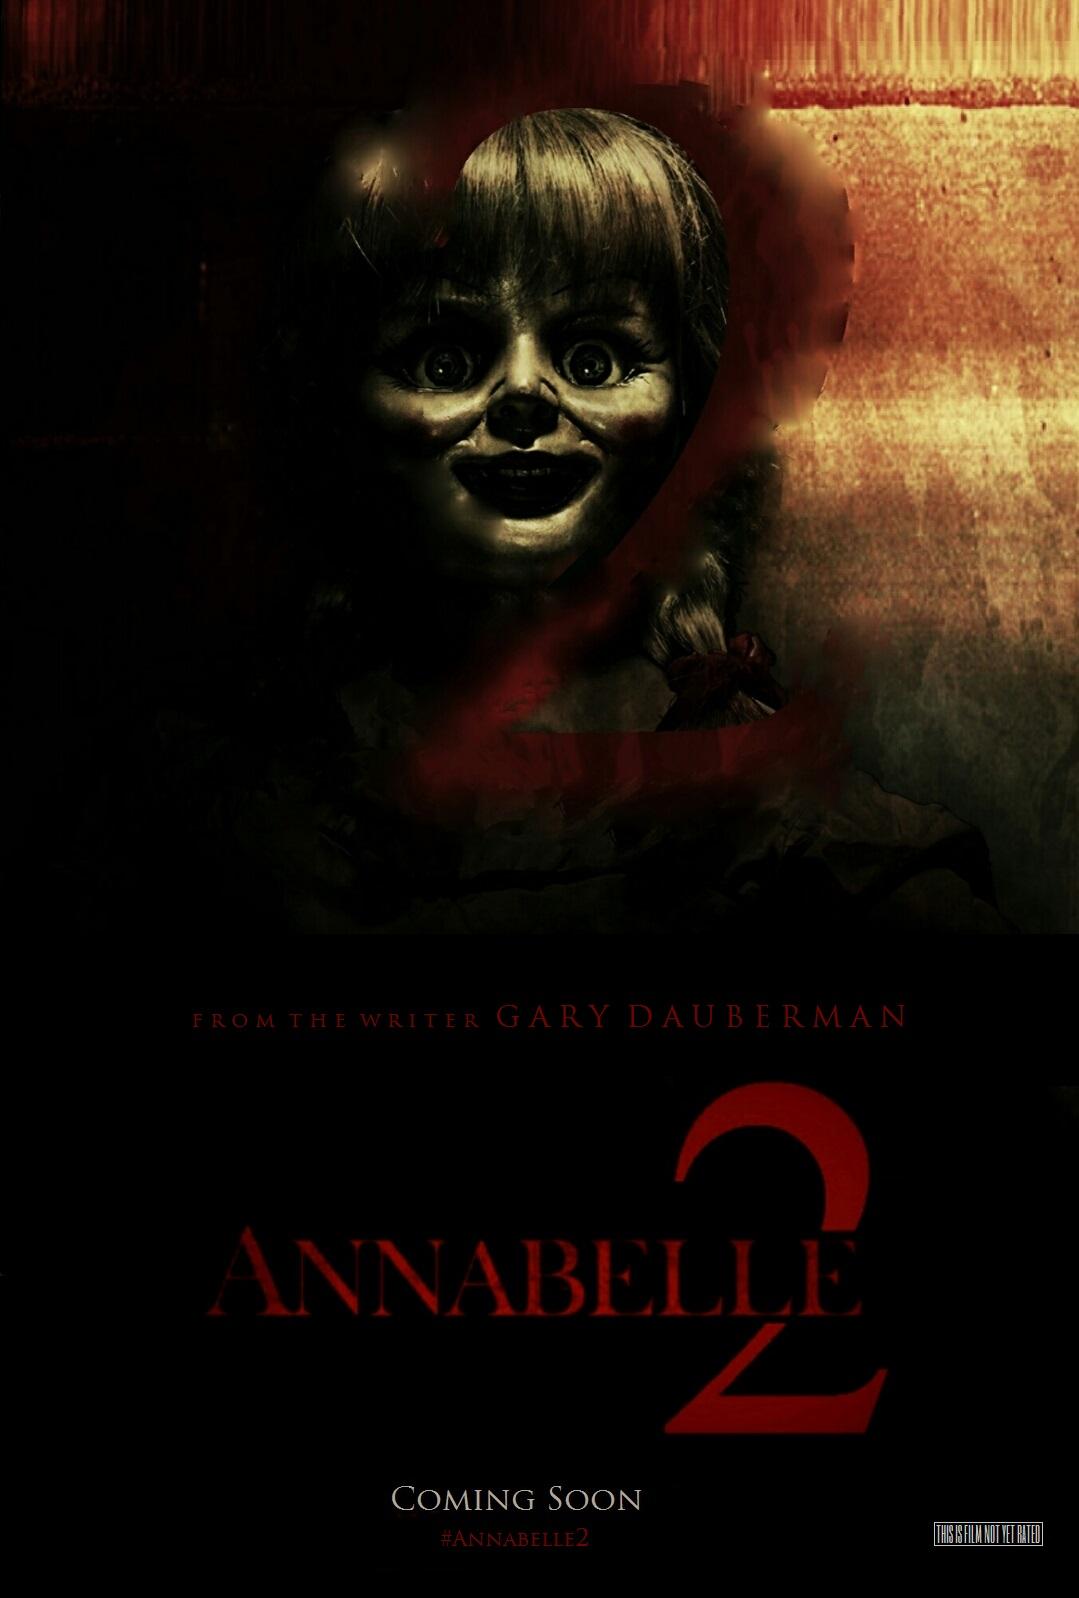 Annabelle 2 Movie Poster